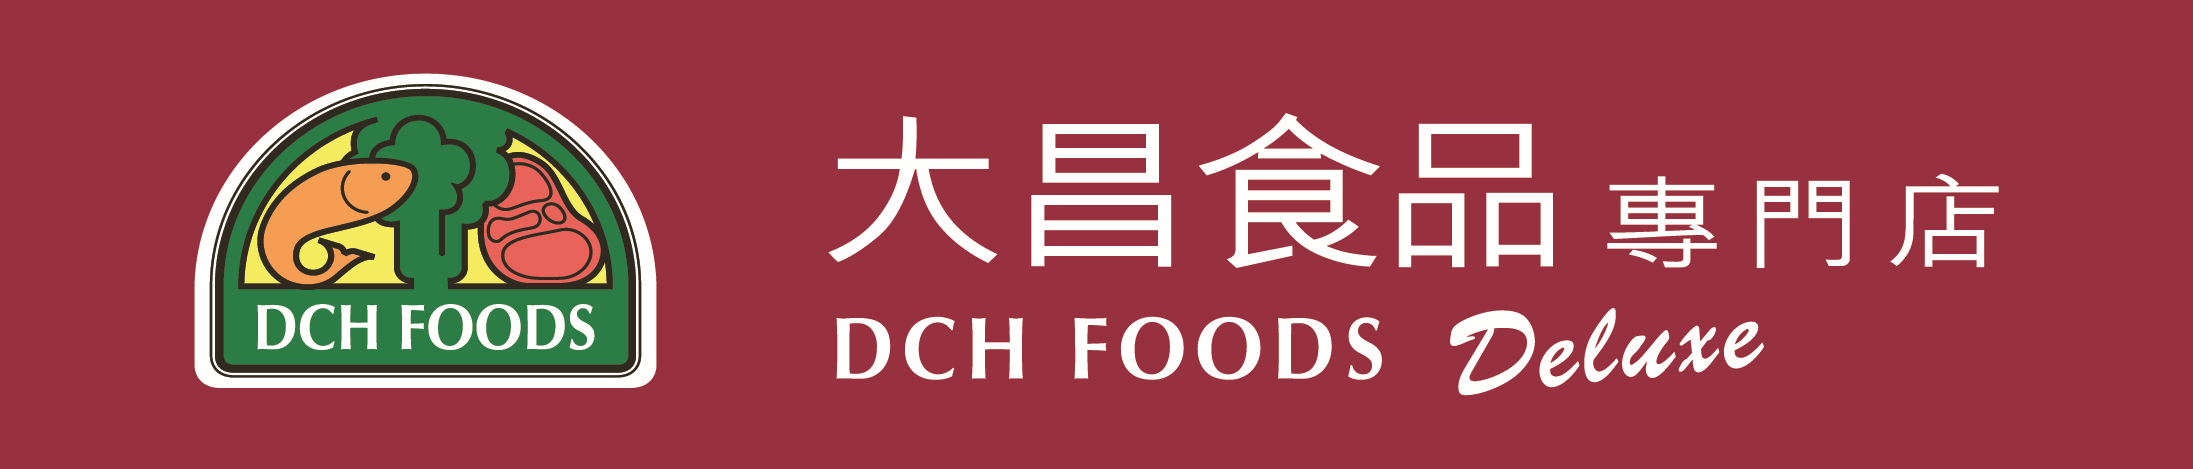 food scheme 2015 gold DCH FoodMart